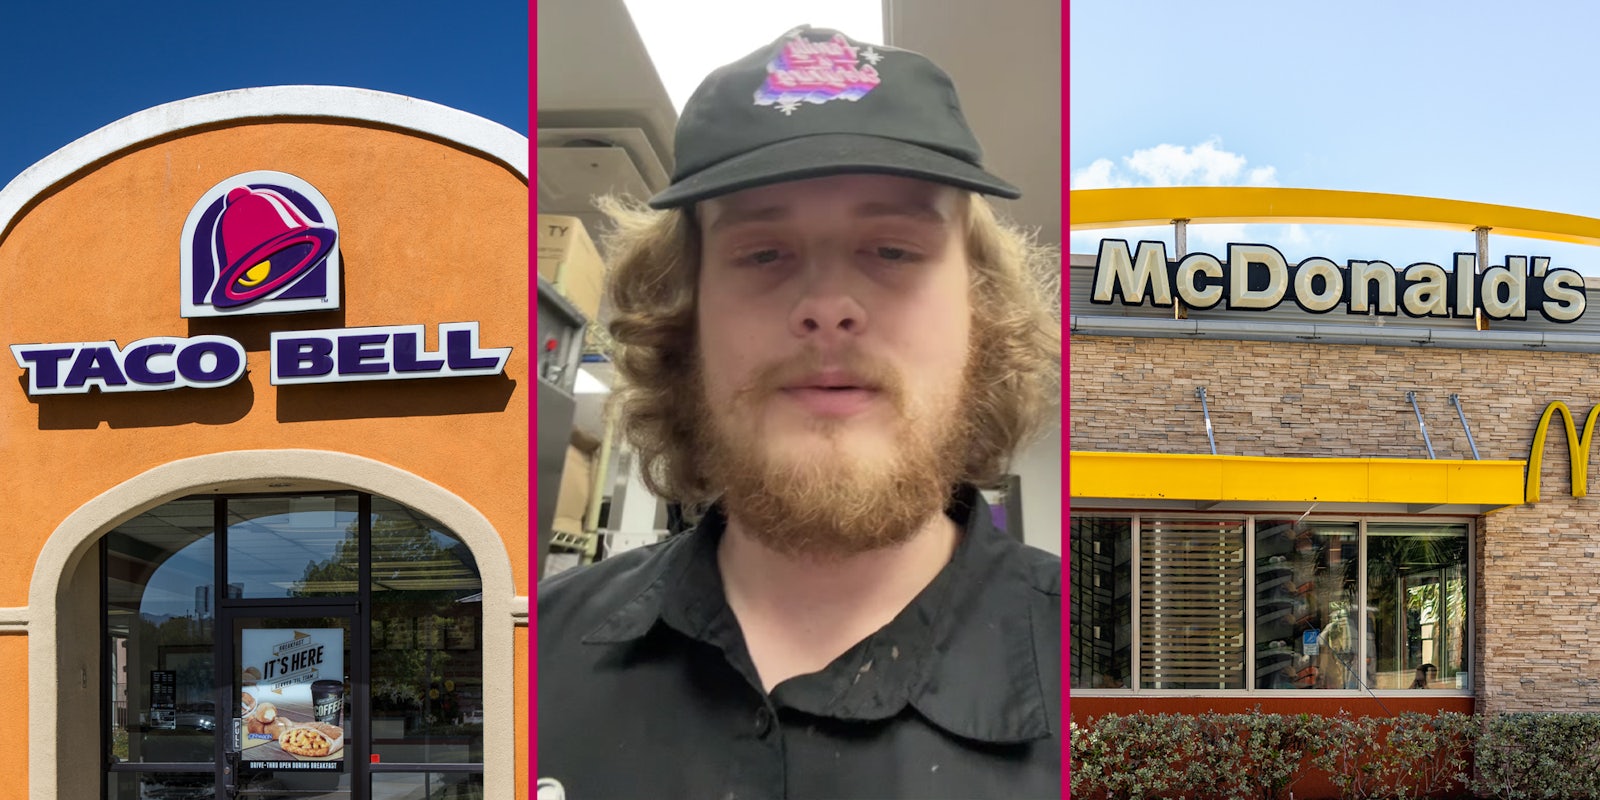 Taco Bell(l), Taco Bell worker(c), McDonald's(r)